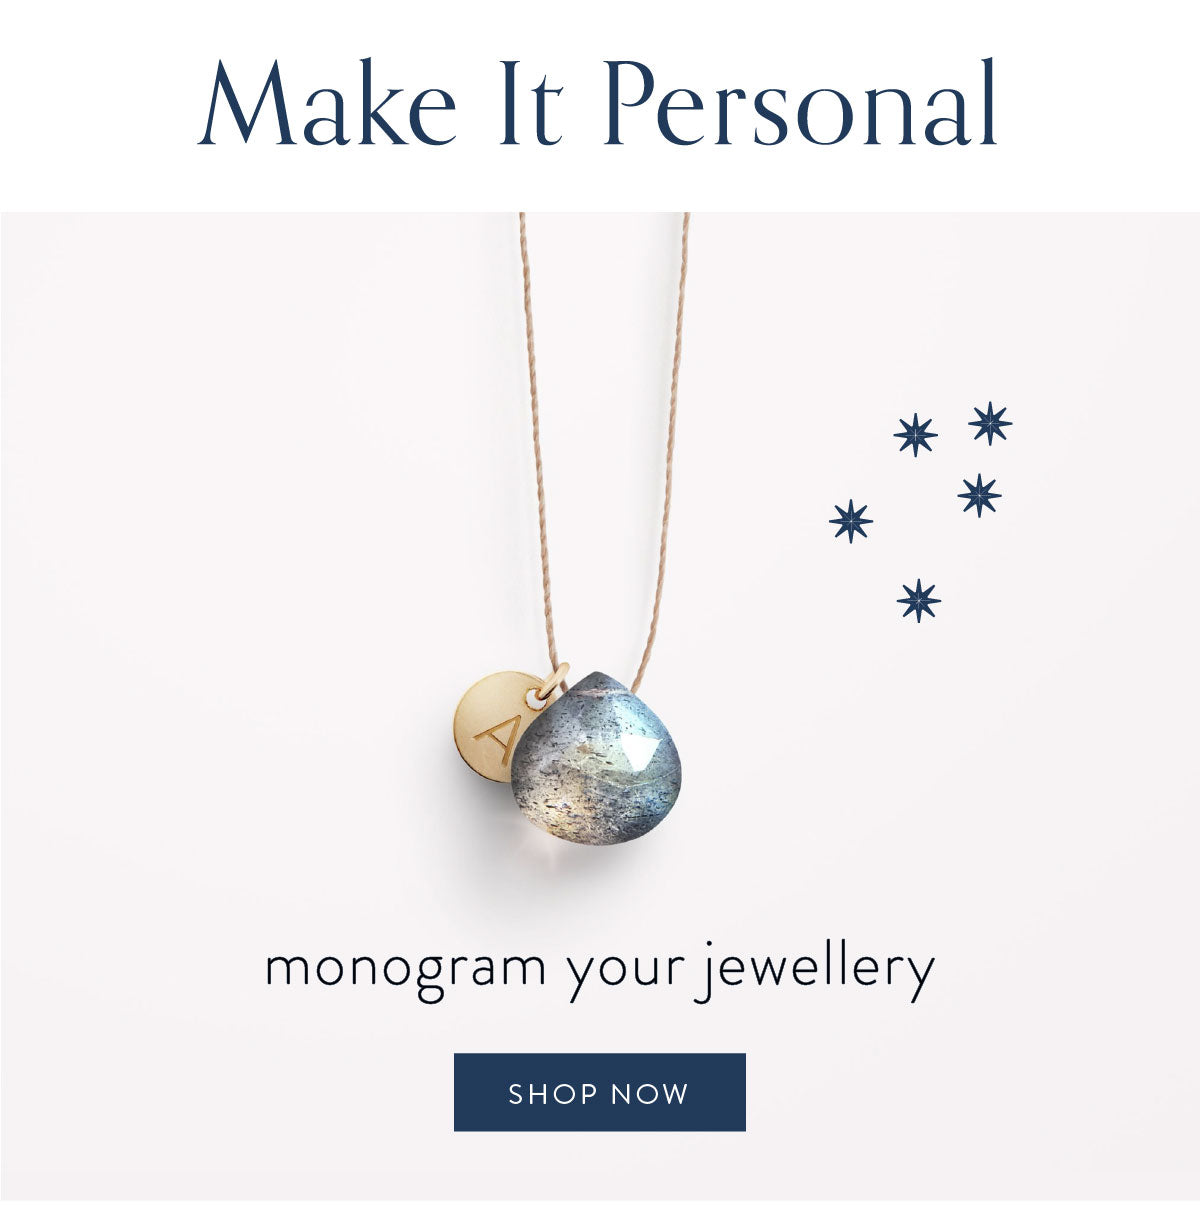 Make it Personal - monogram your jewellery